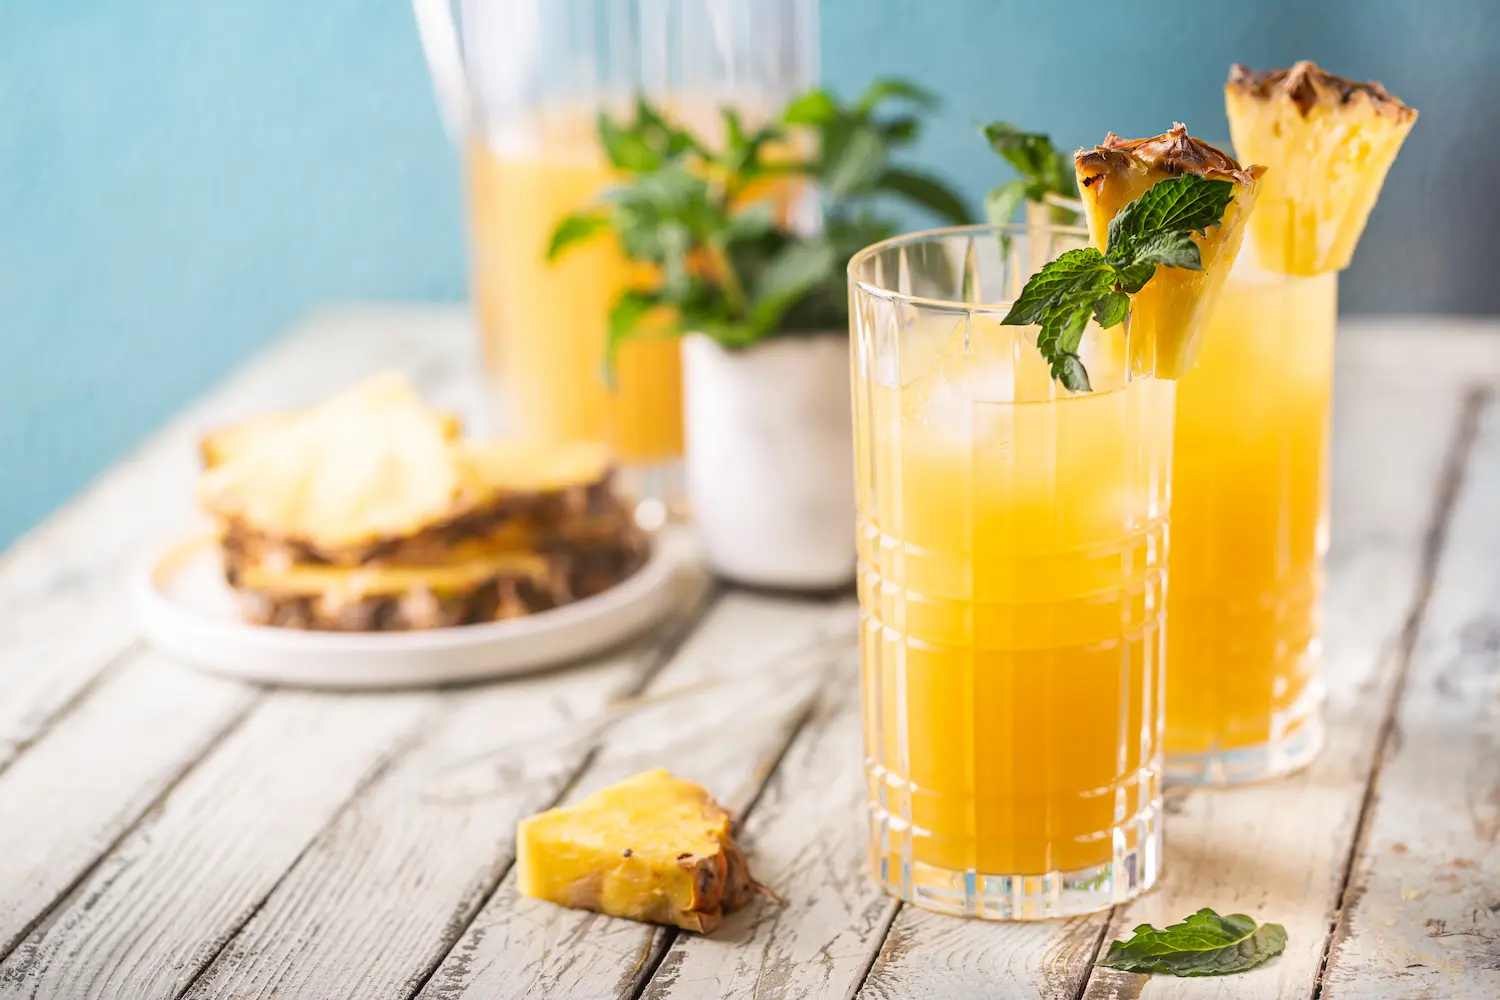 Chef Brandi Solomon's Tipsy Pineapple Cocktail Recipe